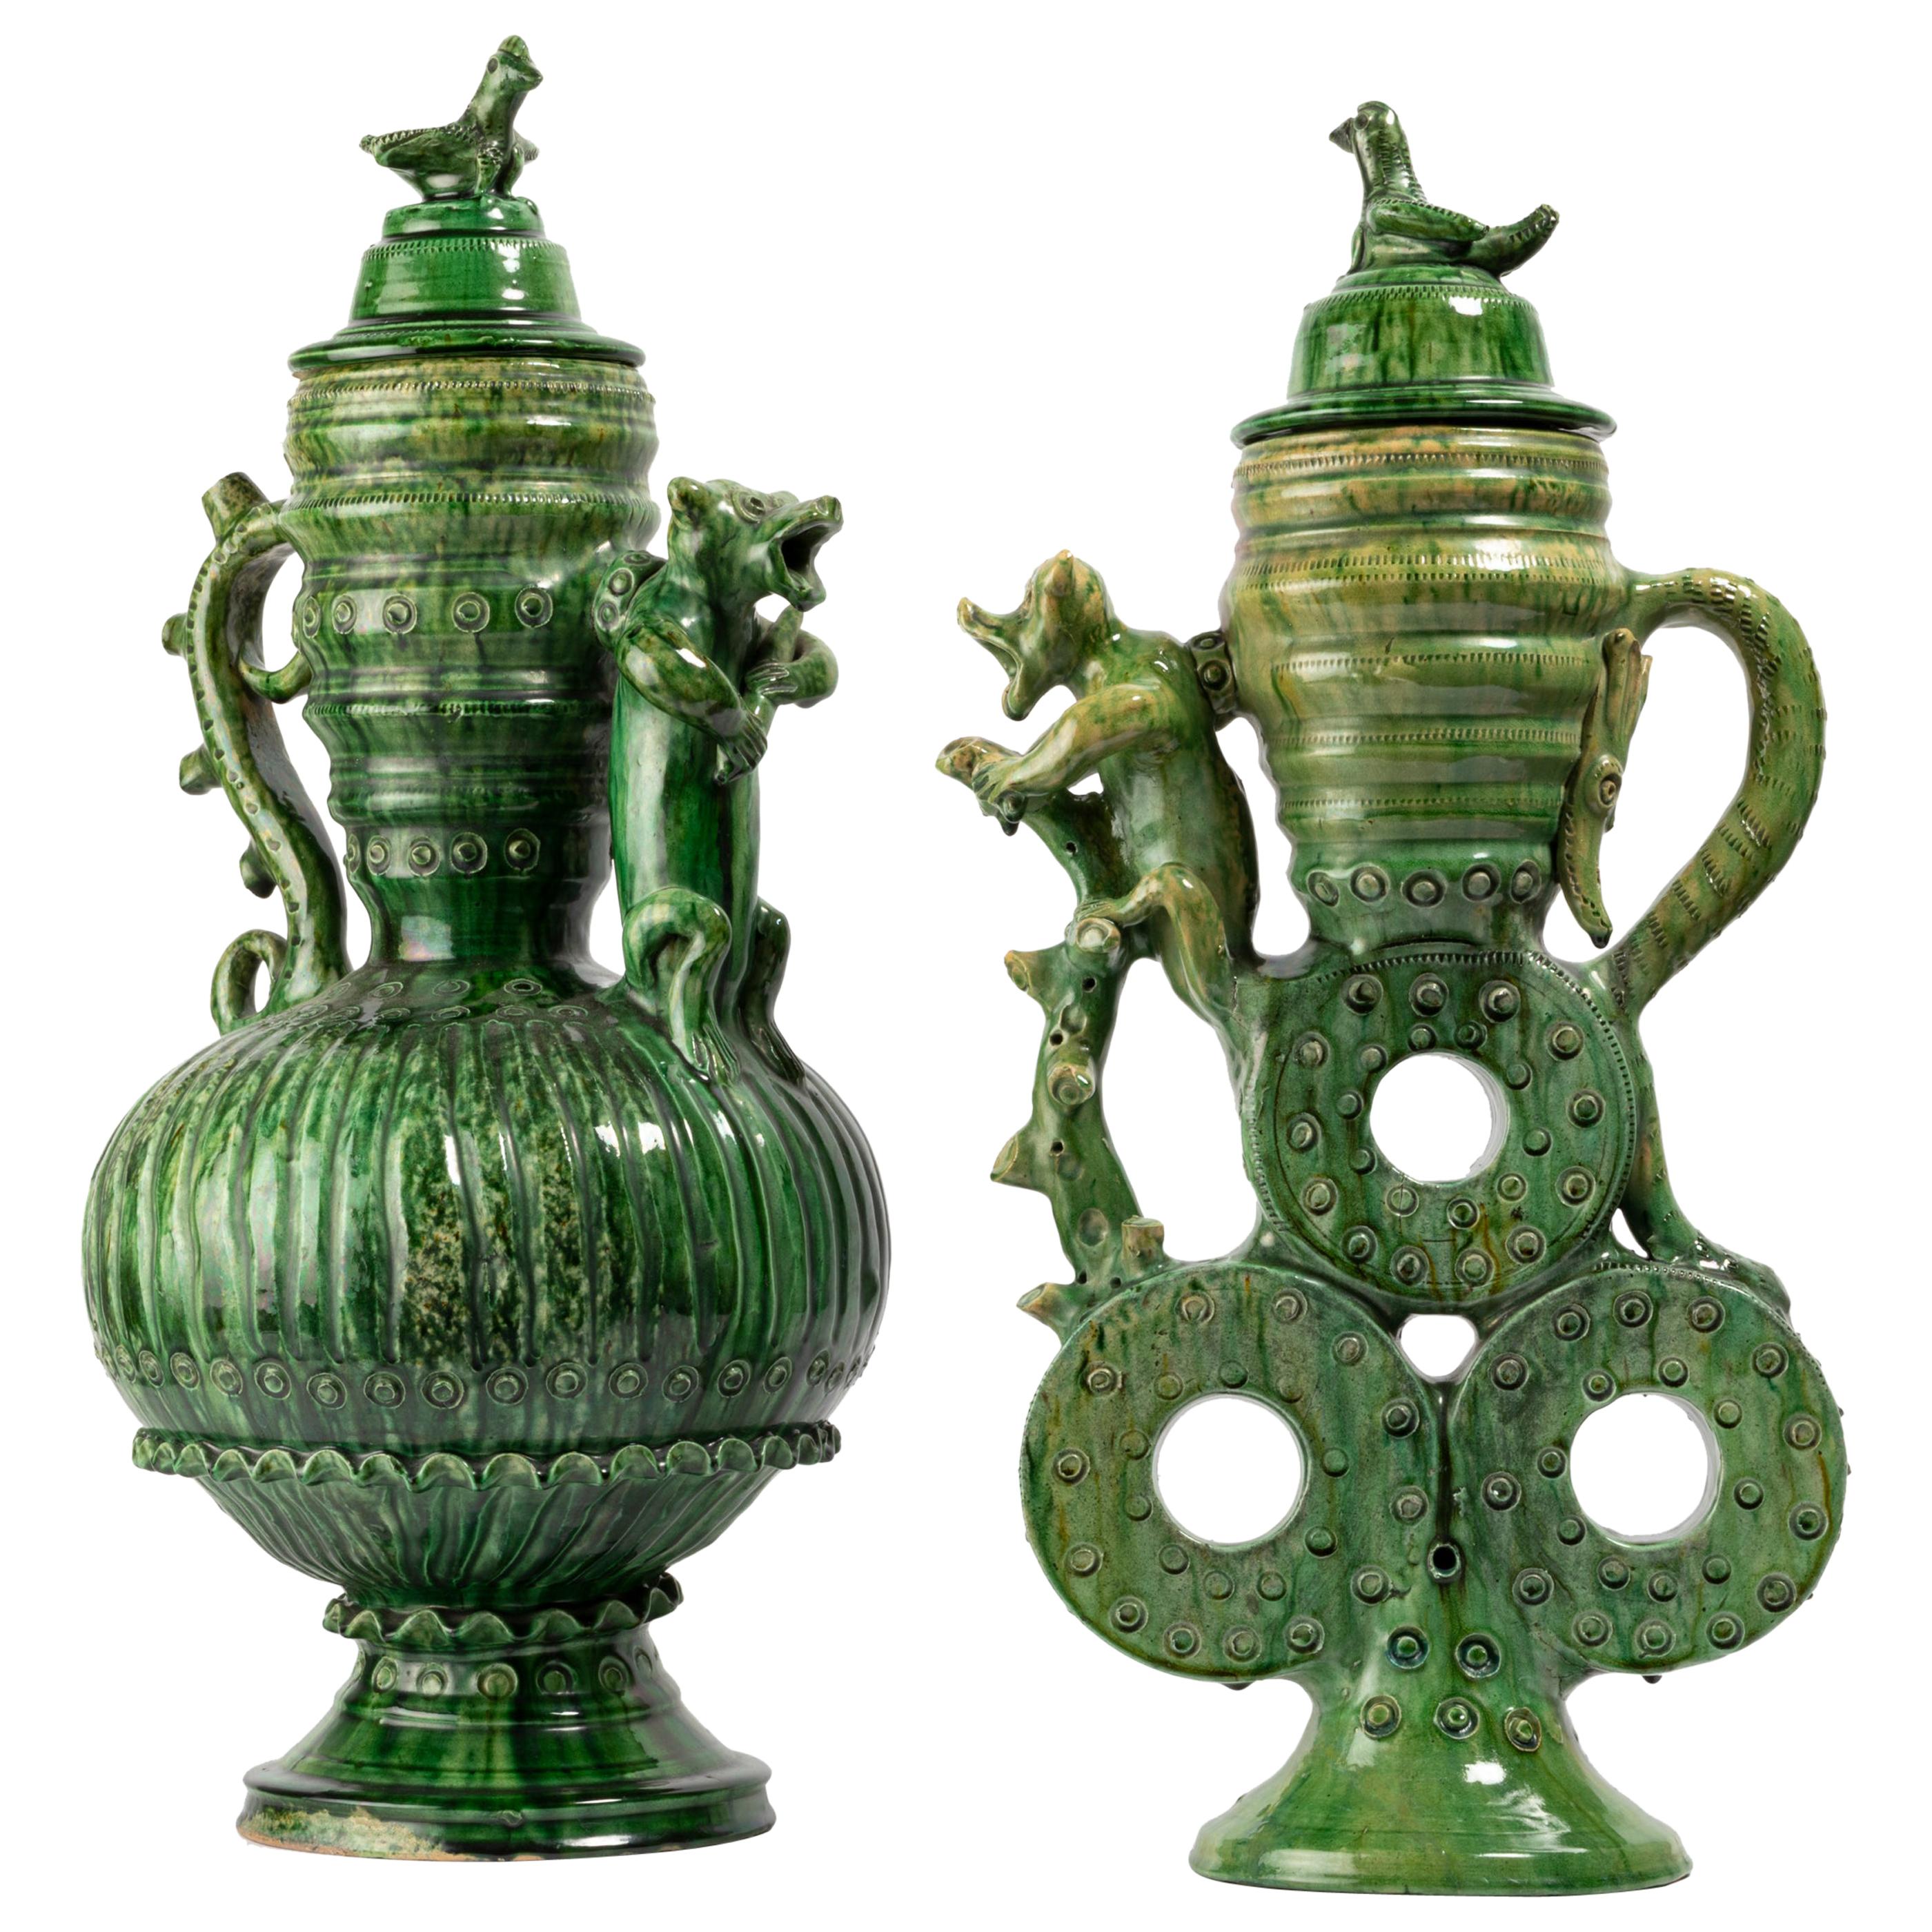 Pair of Ceramic Vases in the style of Saintonge or Pré d'Auge